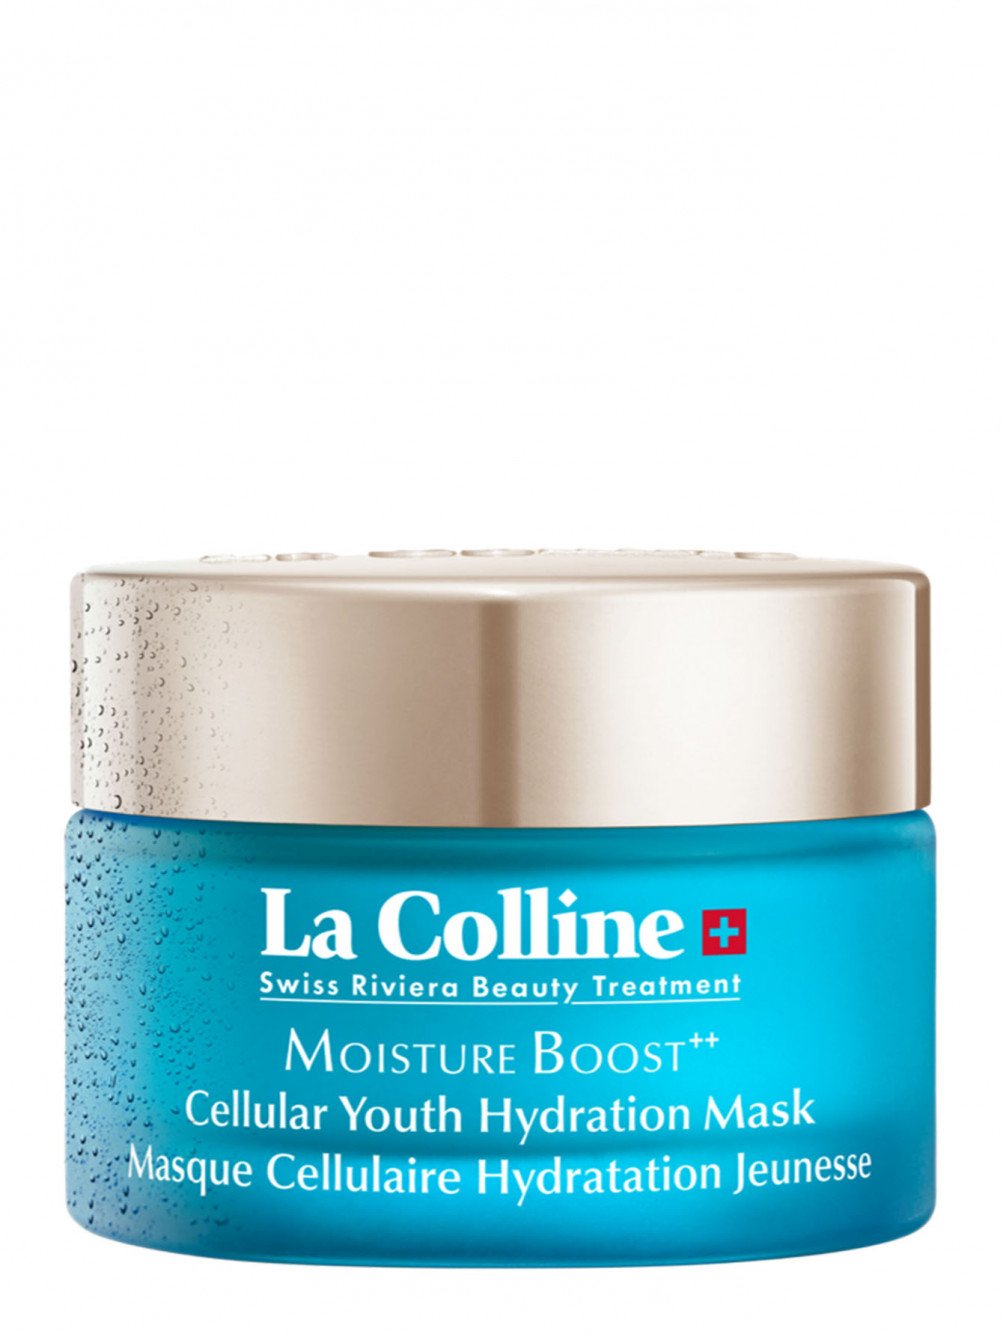 Увлажняющая маска для лица Moisture Boost Cellular Youth Hydration Mask, 50 мл - Общий вид